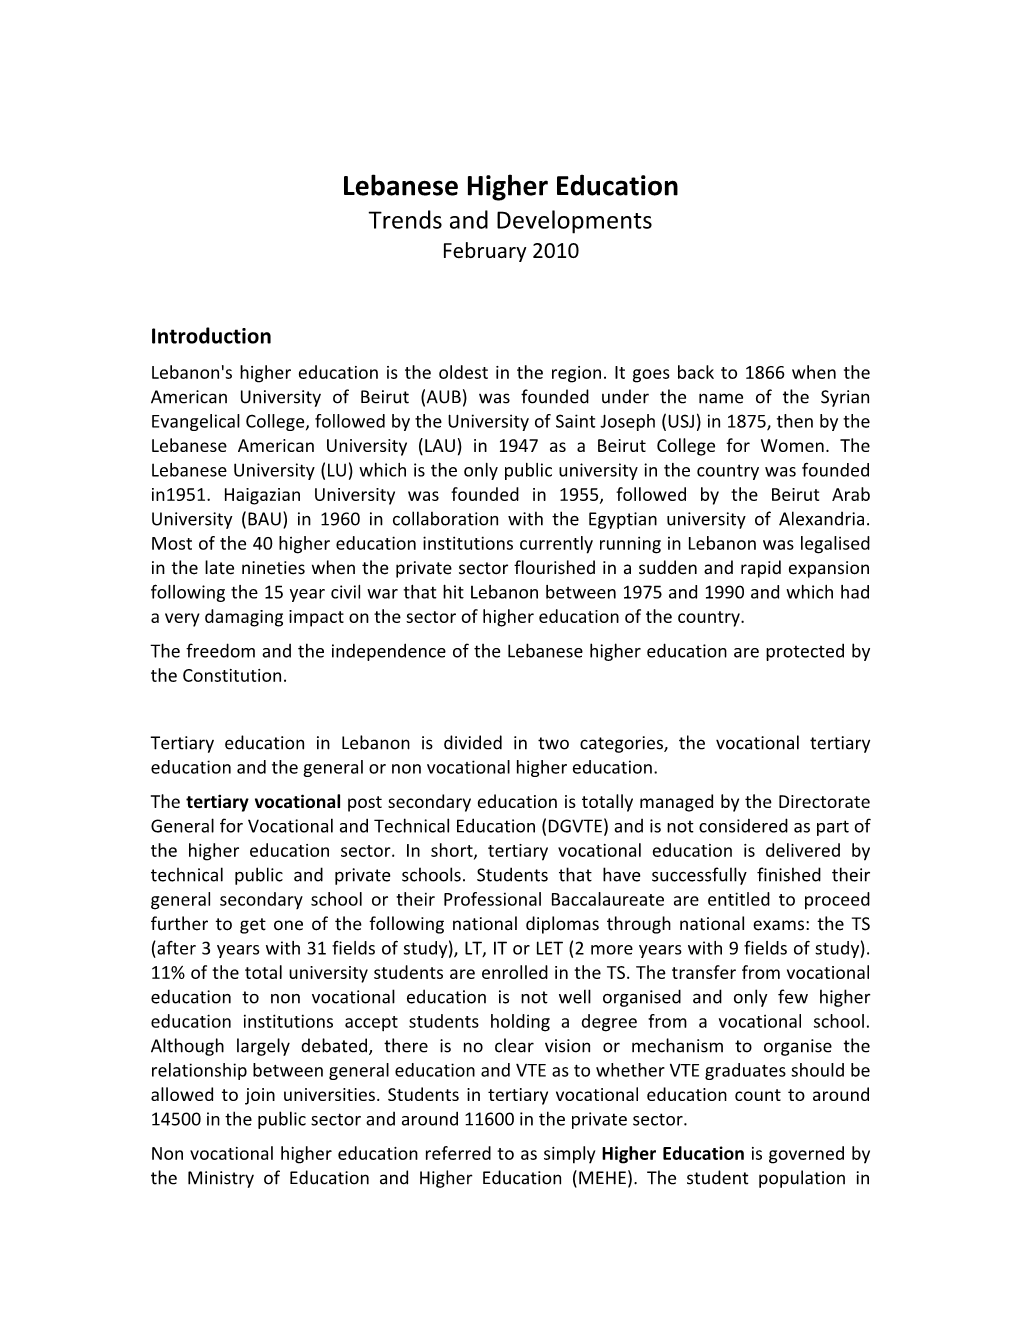 Lebanese Higher Education Trends and Developments February 2010